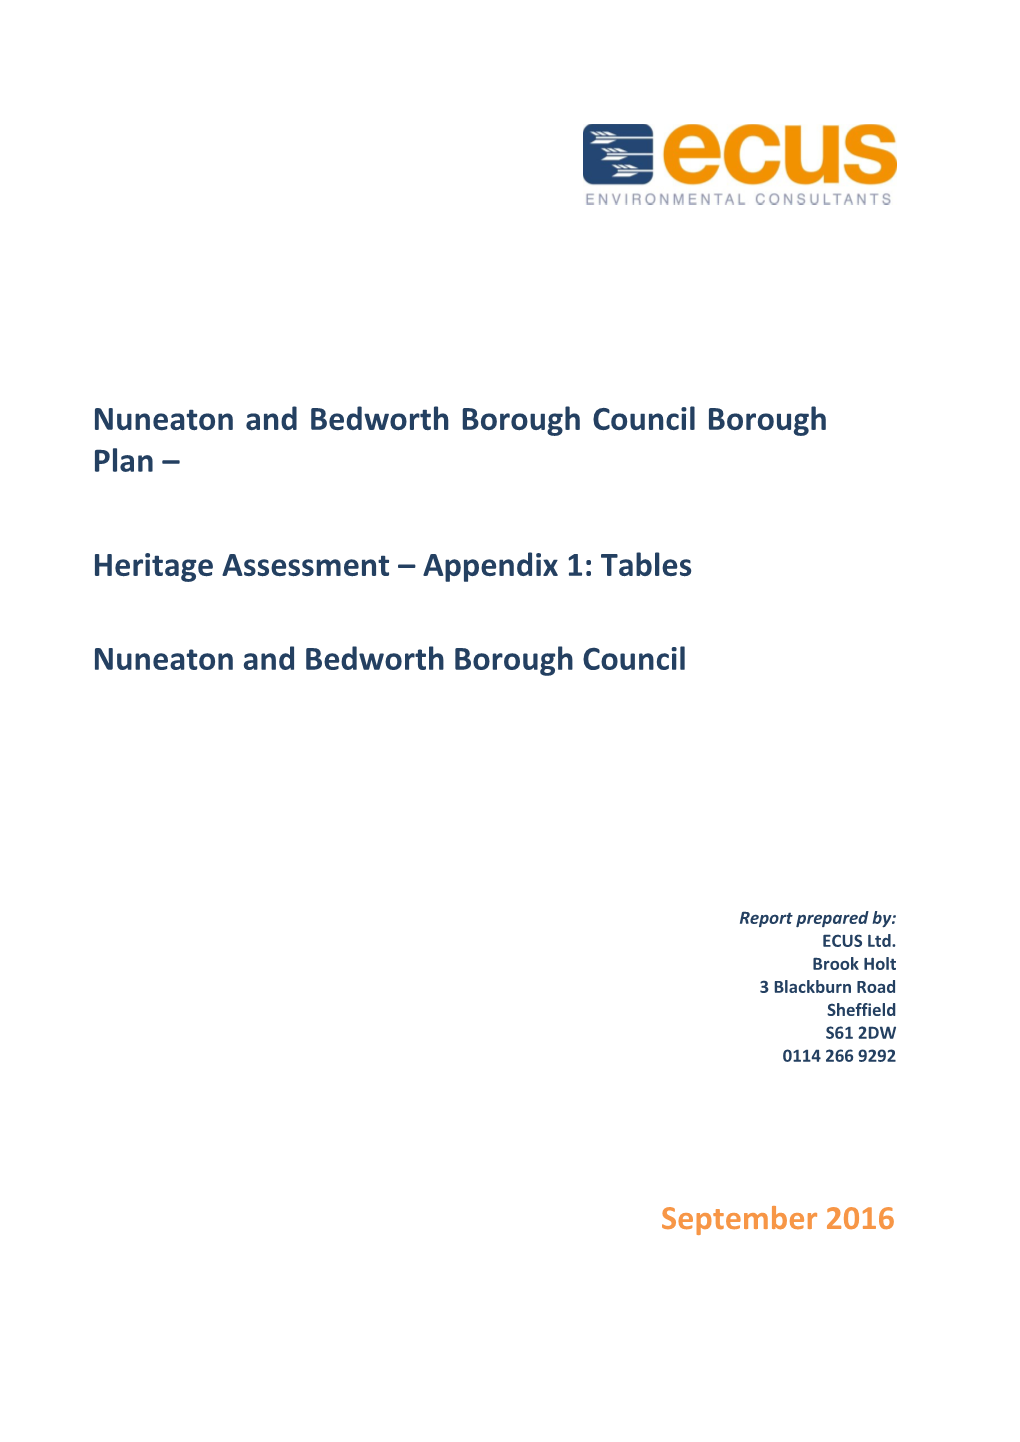 Heritage Assessment – Appendix 1: Tables